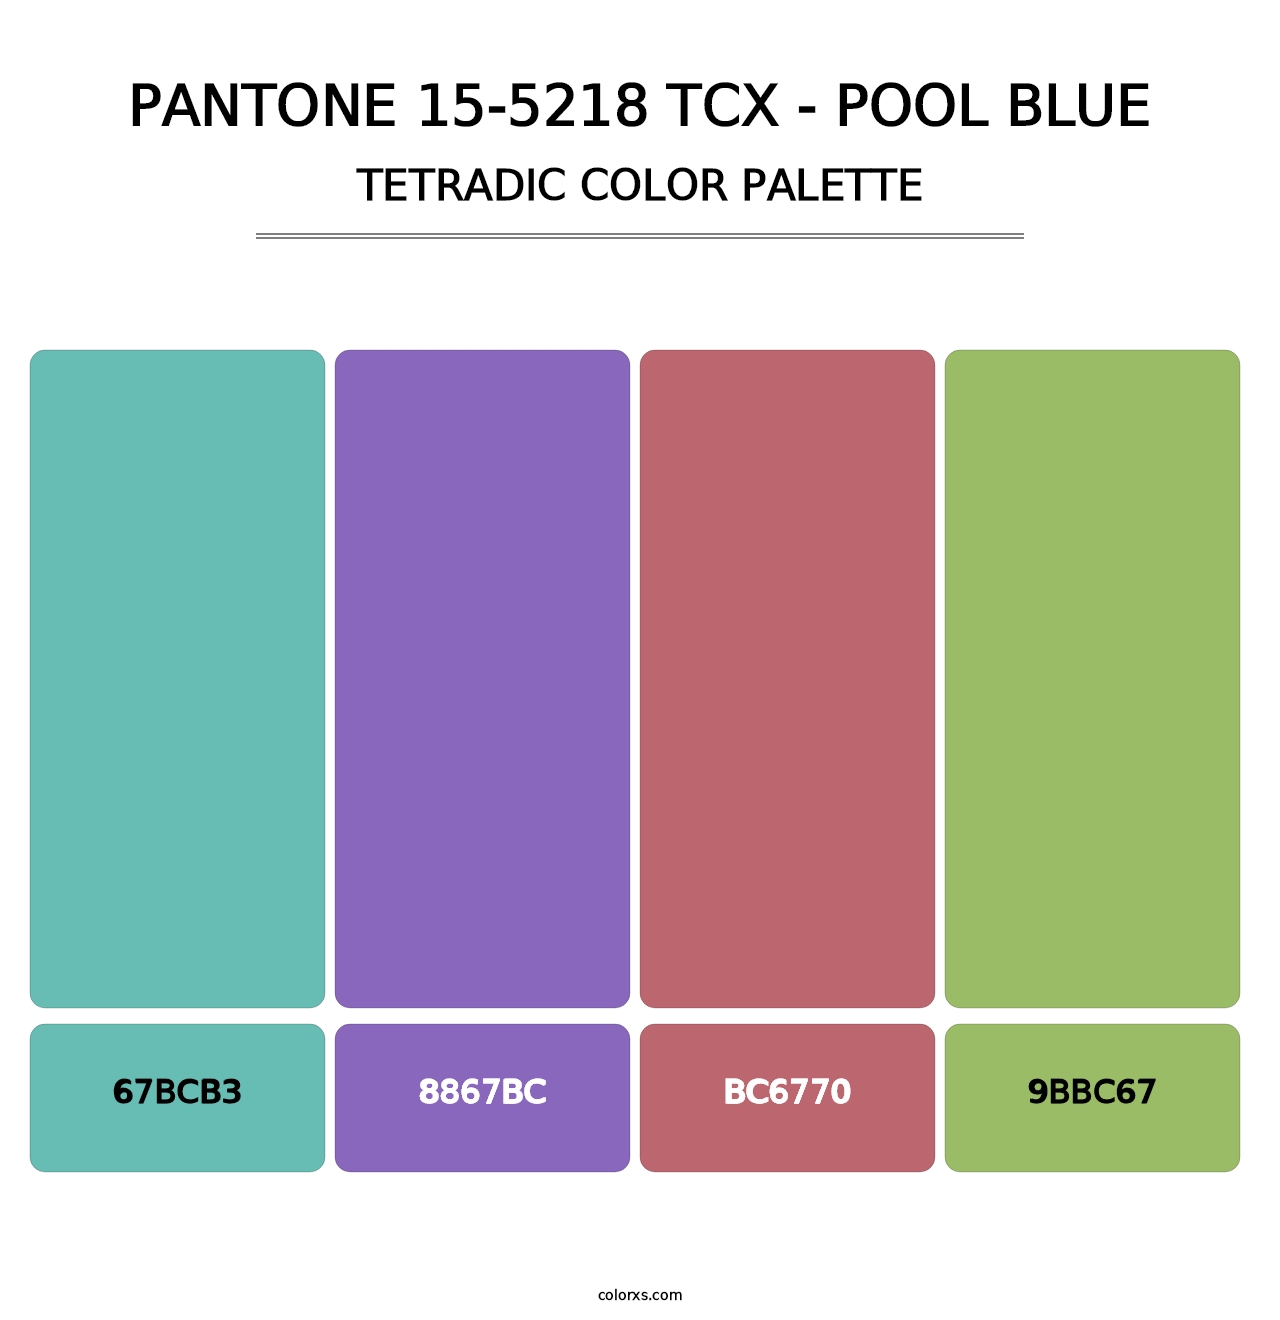 PANTONE 15-5218 TCX - Pool Blue - Tetradic Color Palette